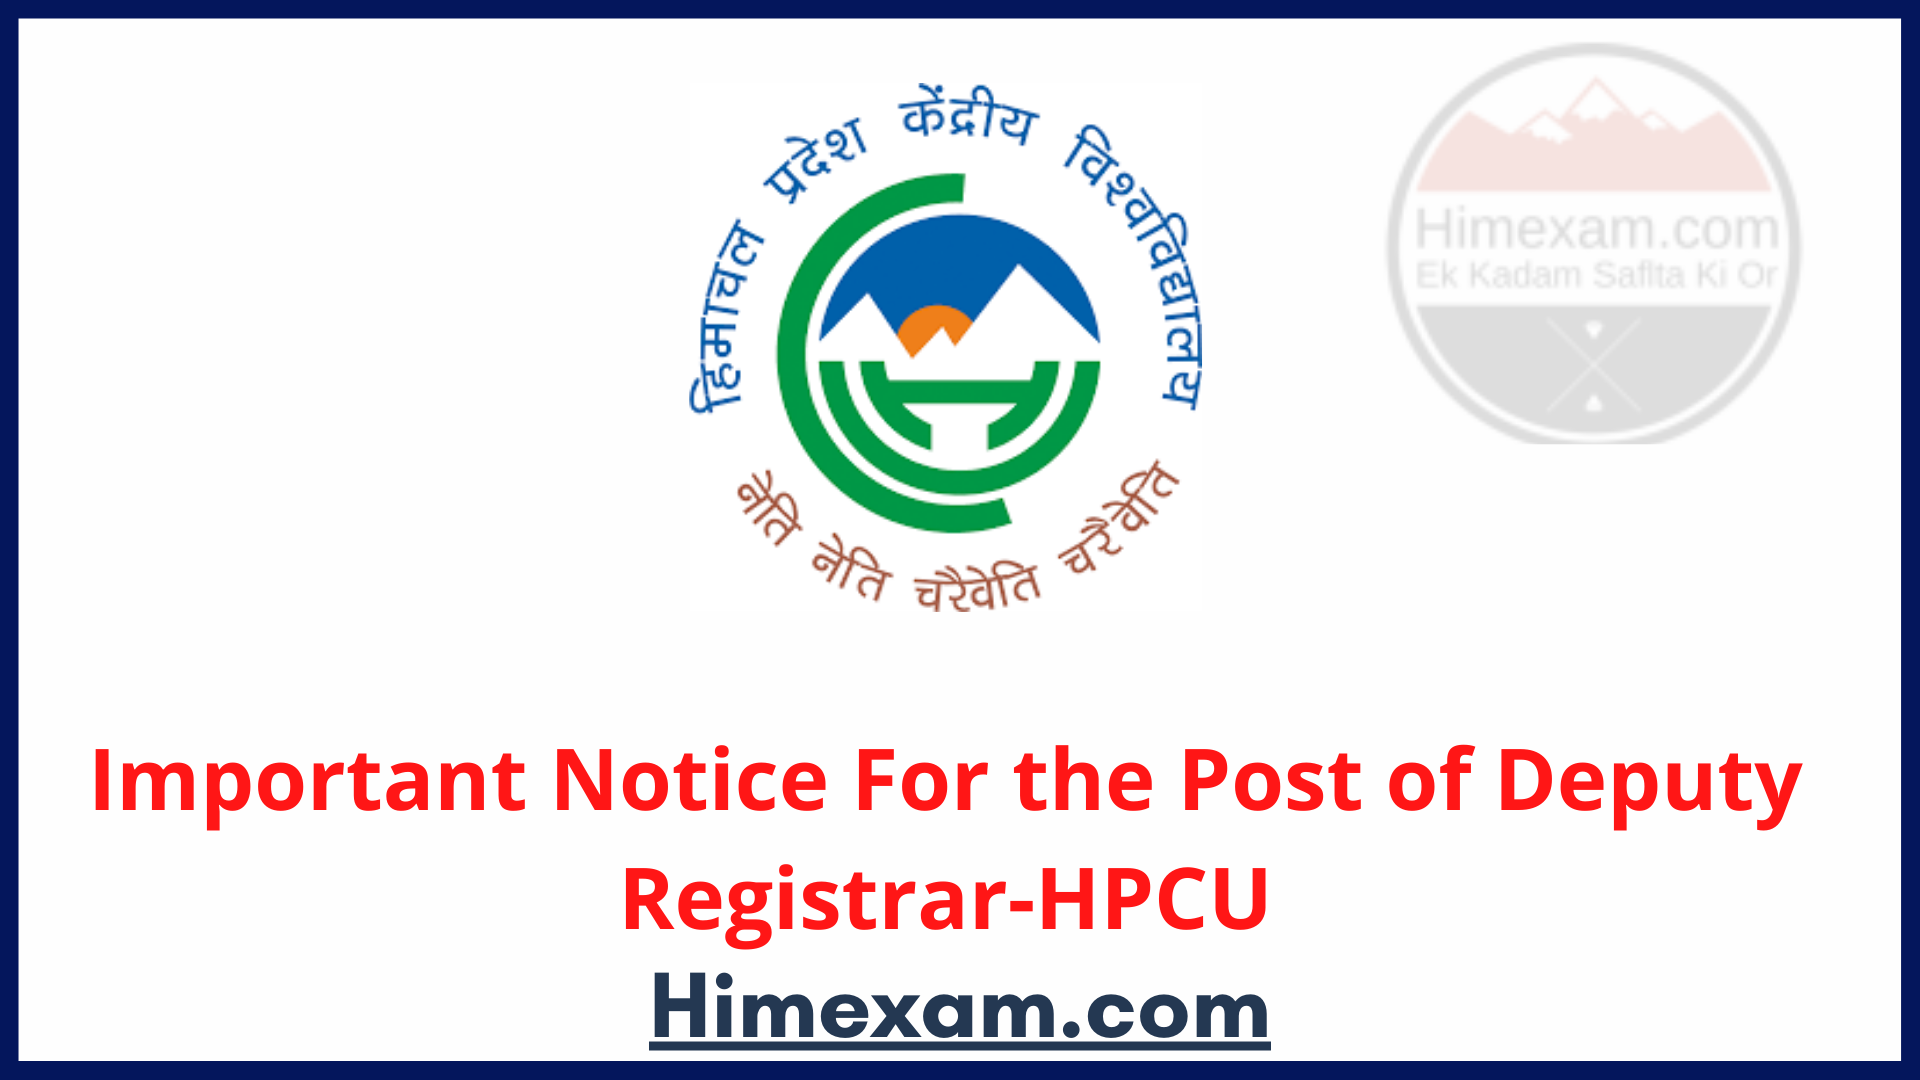 Important Notice For the Post of Deputy Registrar-HPCU